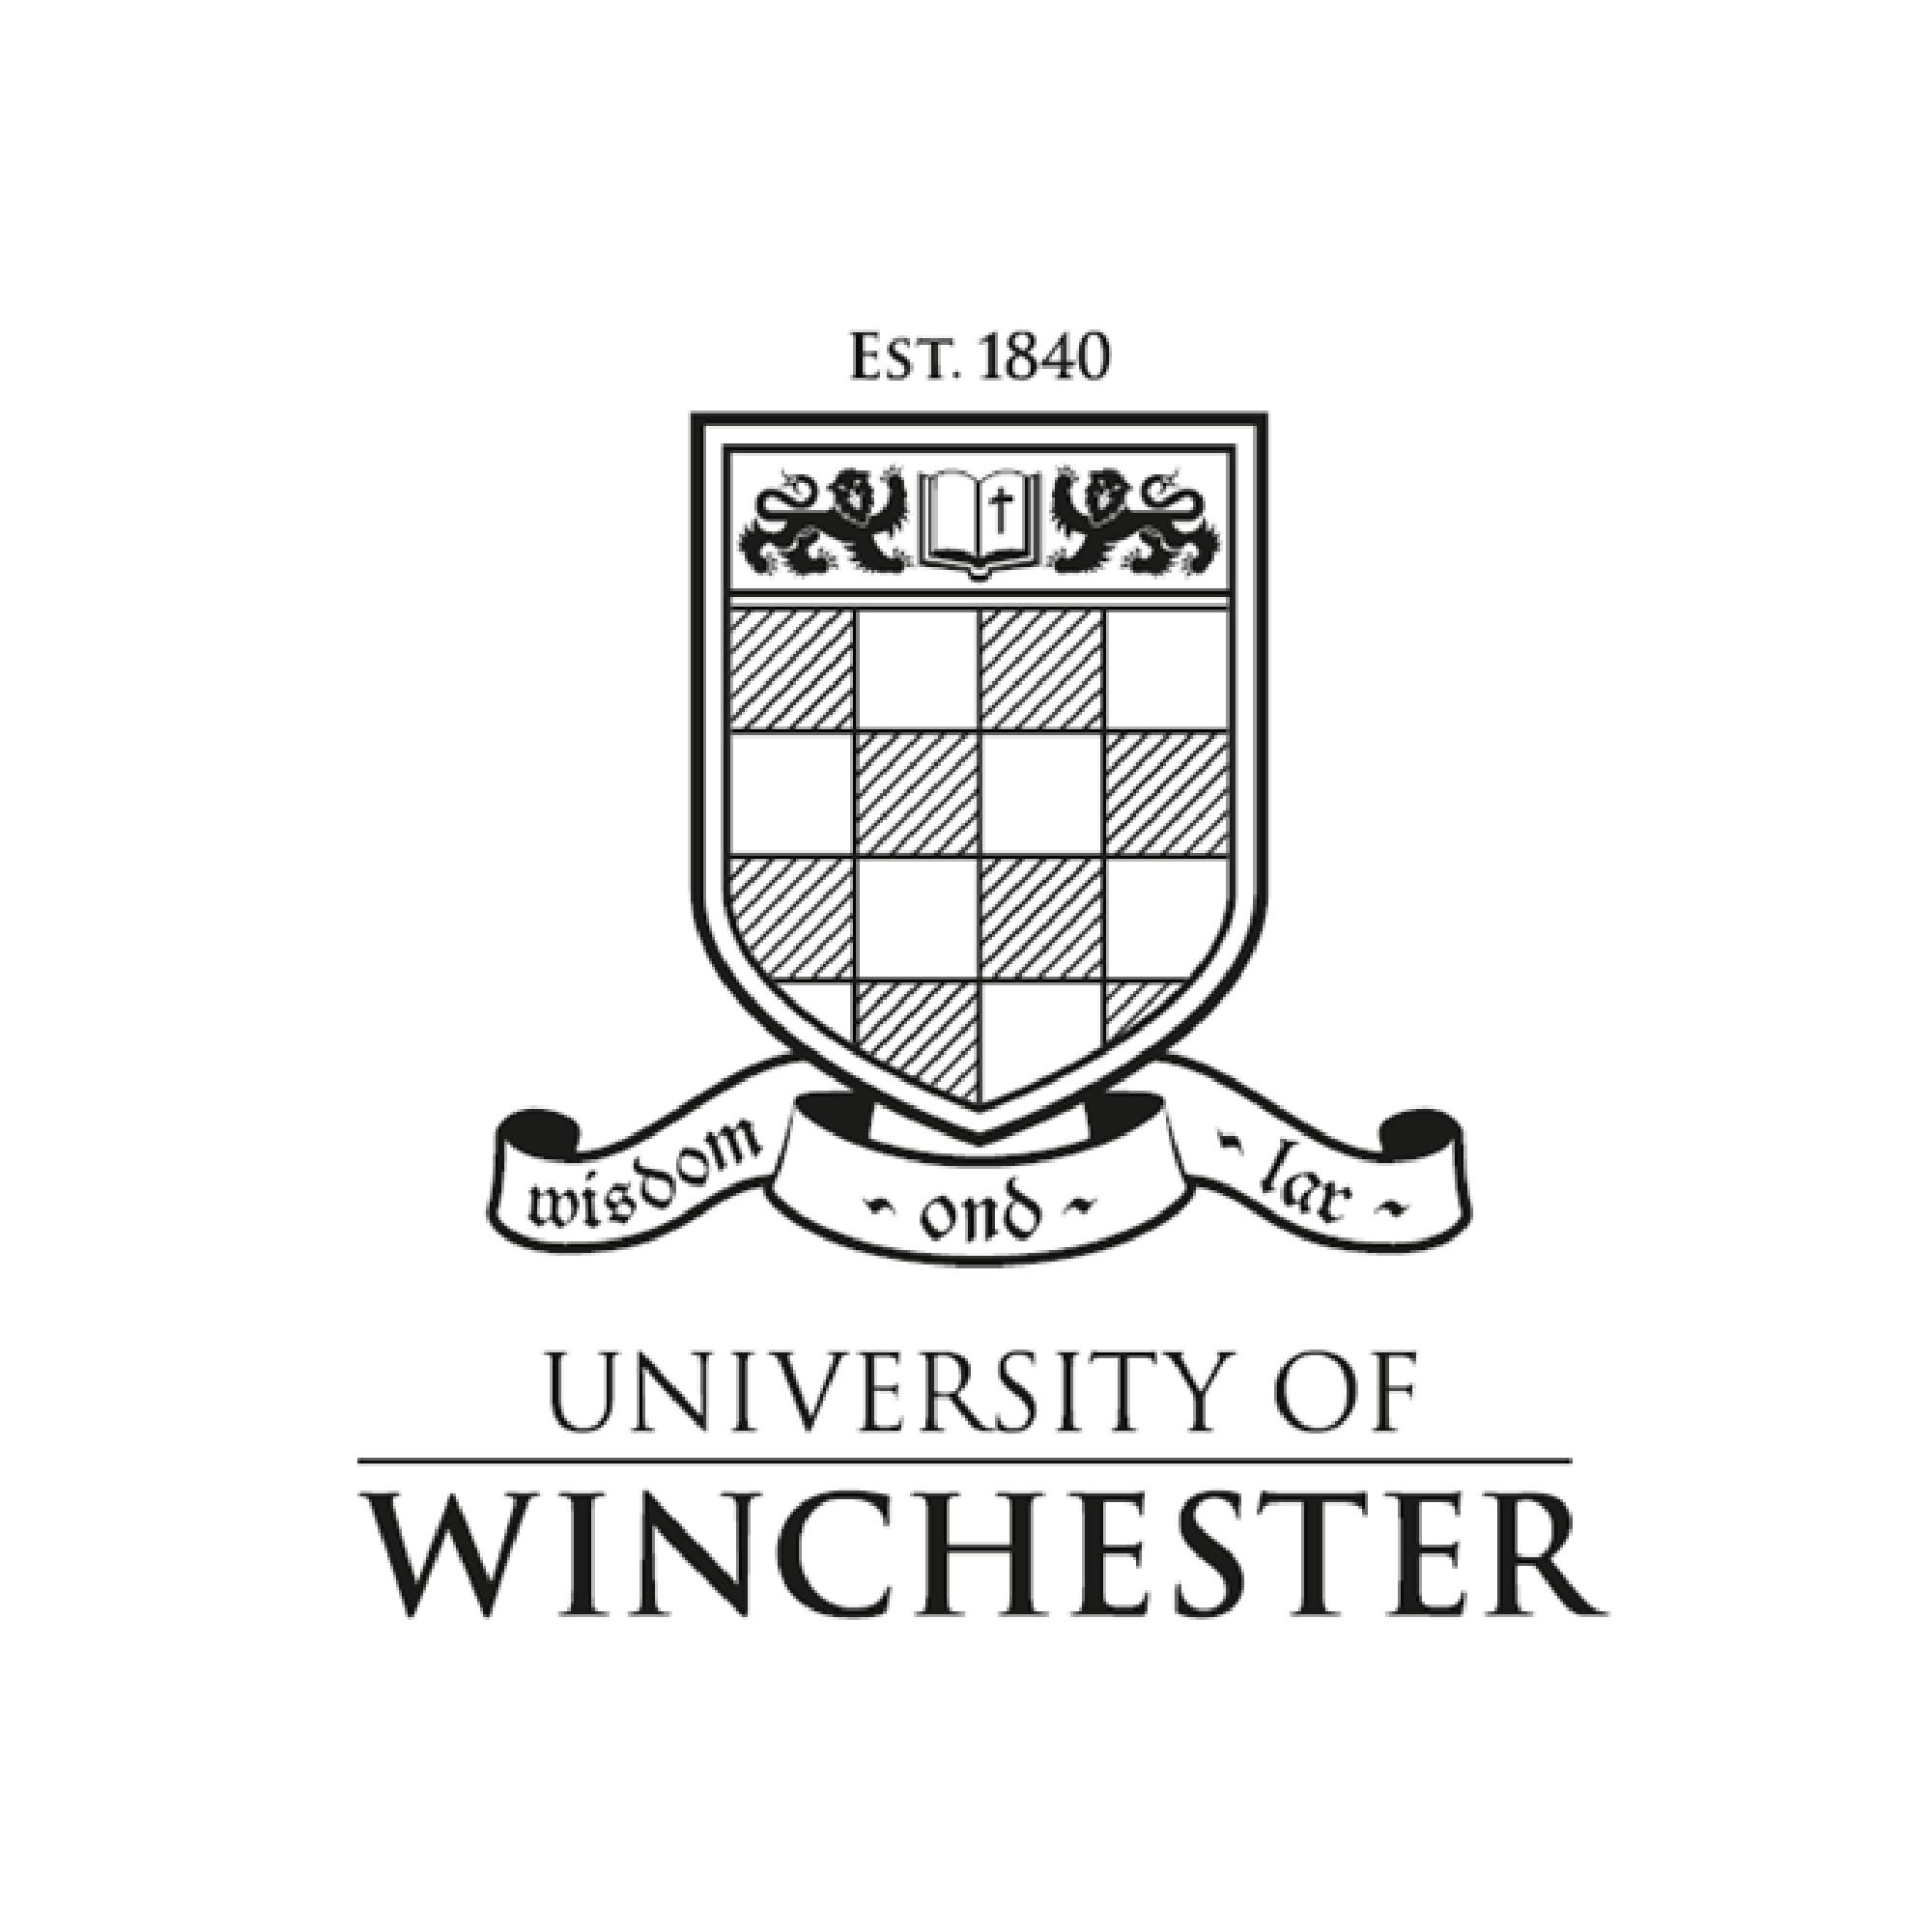 University of Winchester (Copy)